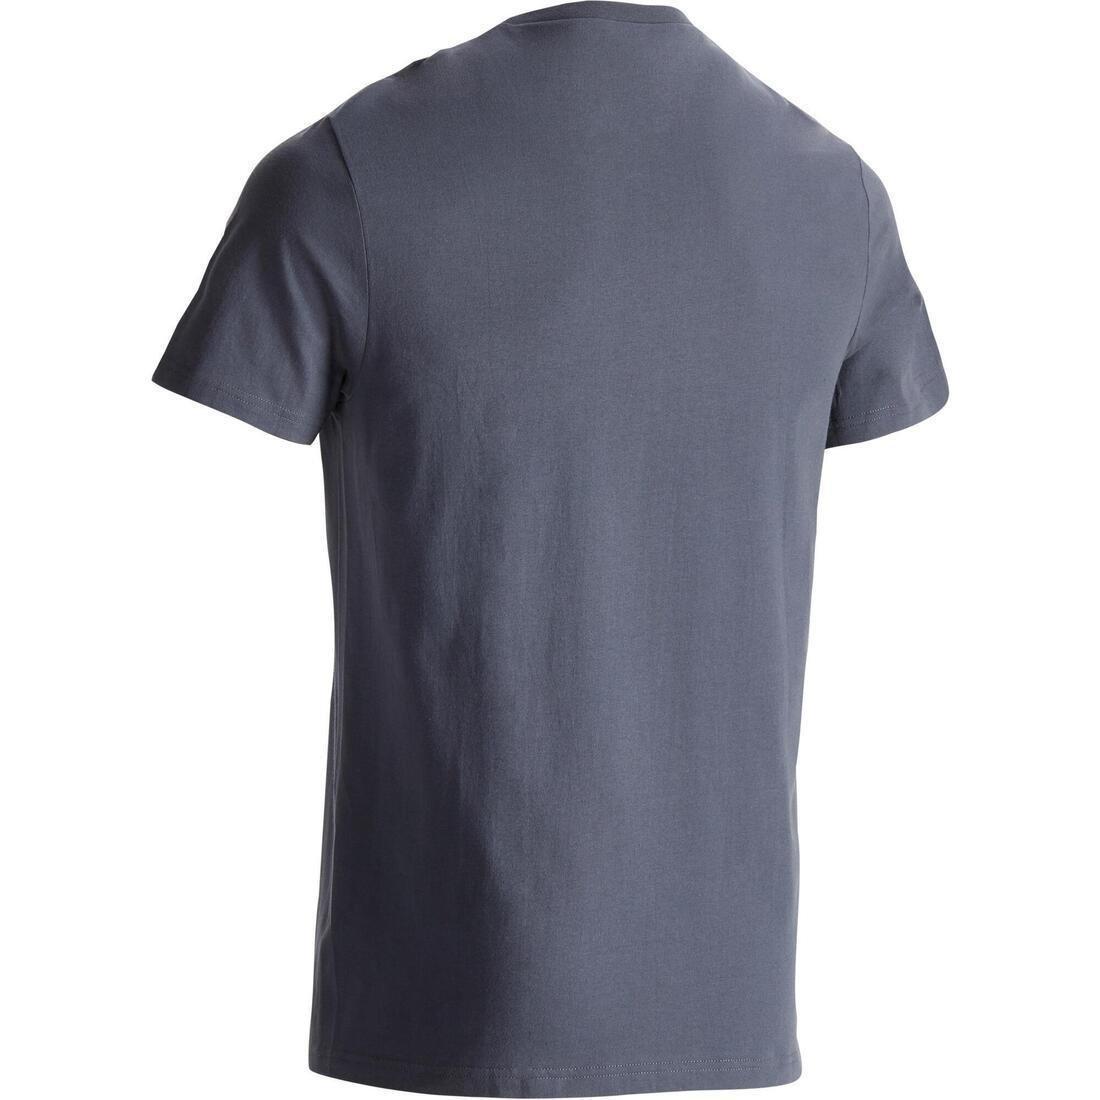 DOMYOS - Fitness Pure Cotton T-Shirt Sportee, Black